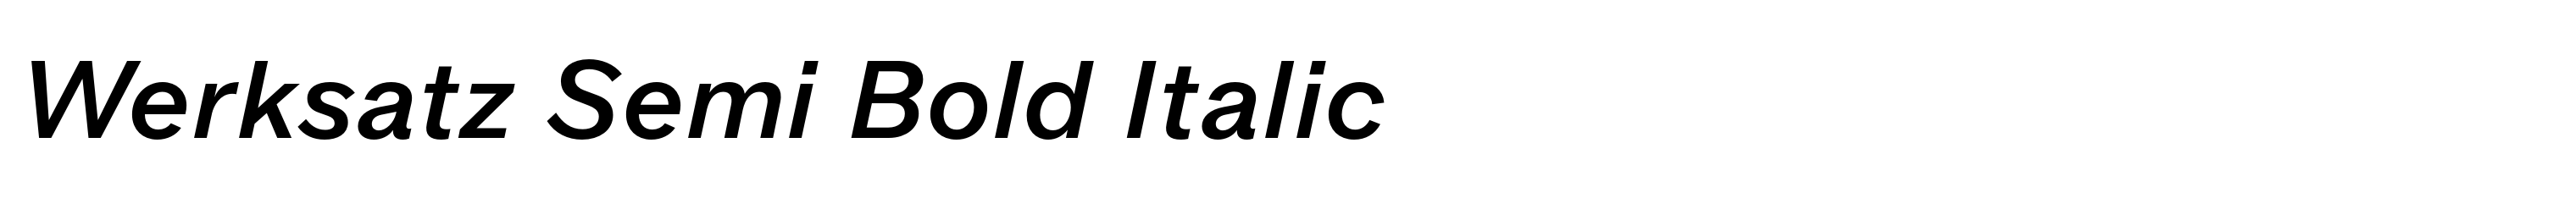 Werksatz Semi Bold Italic